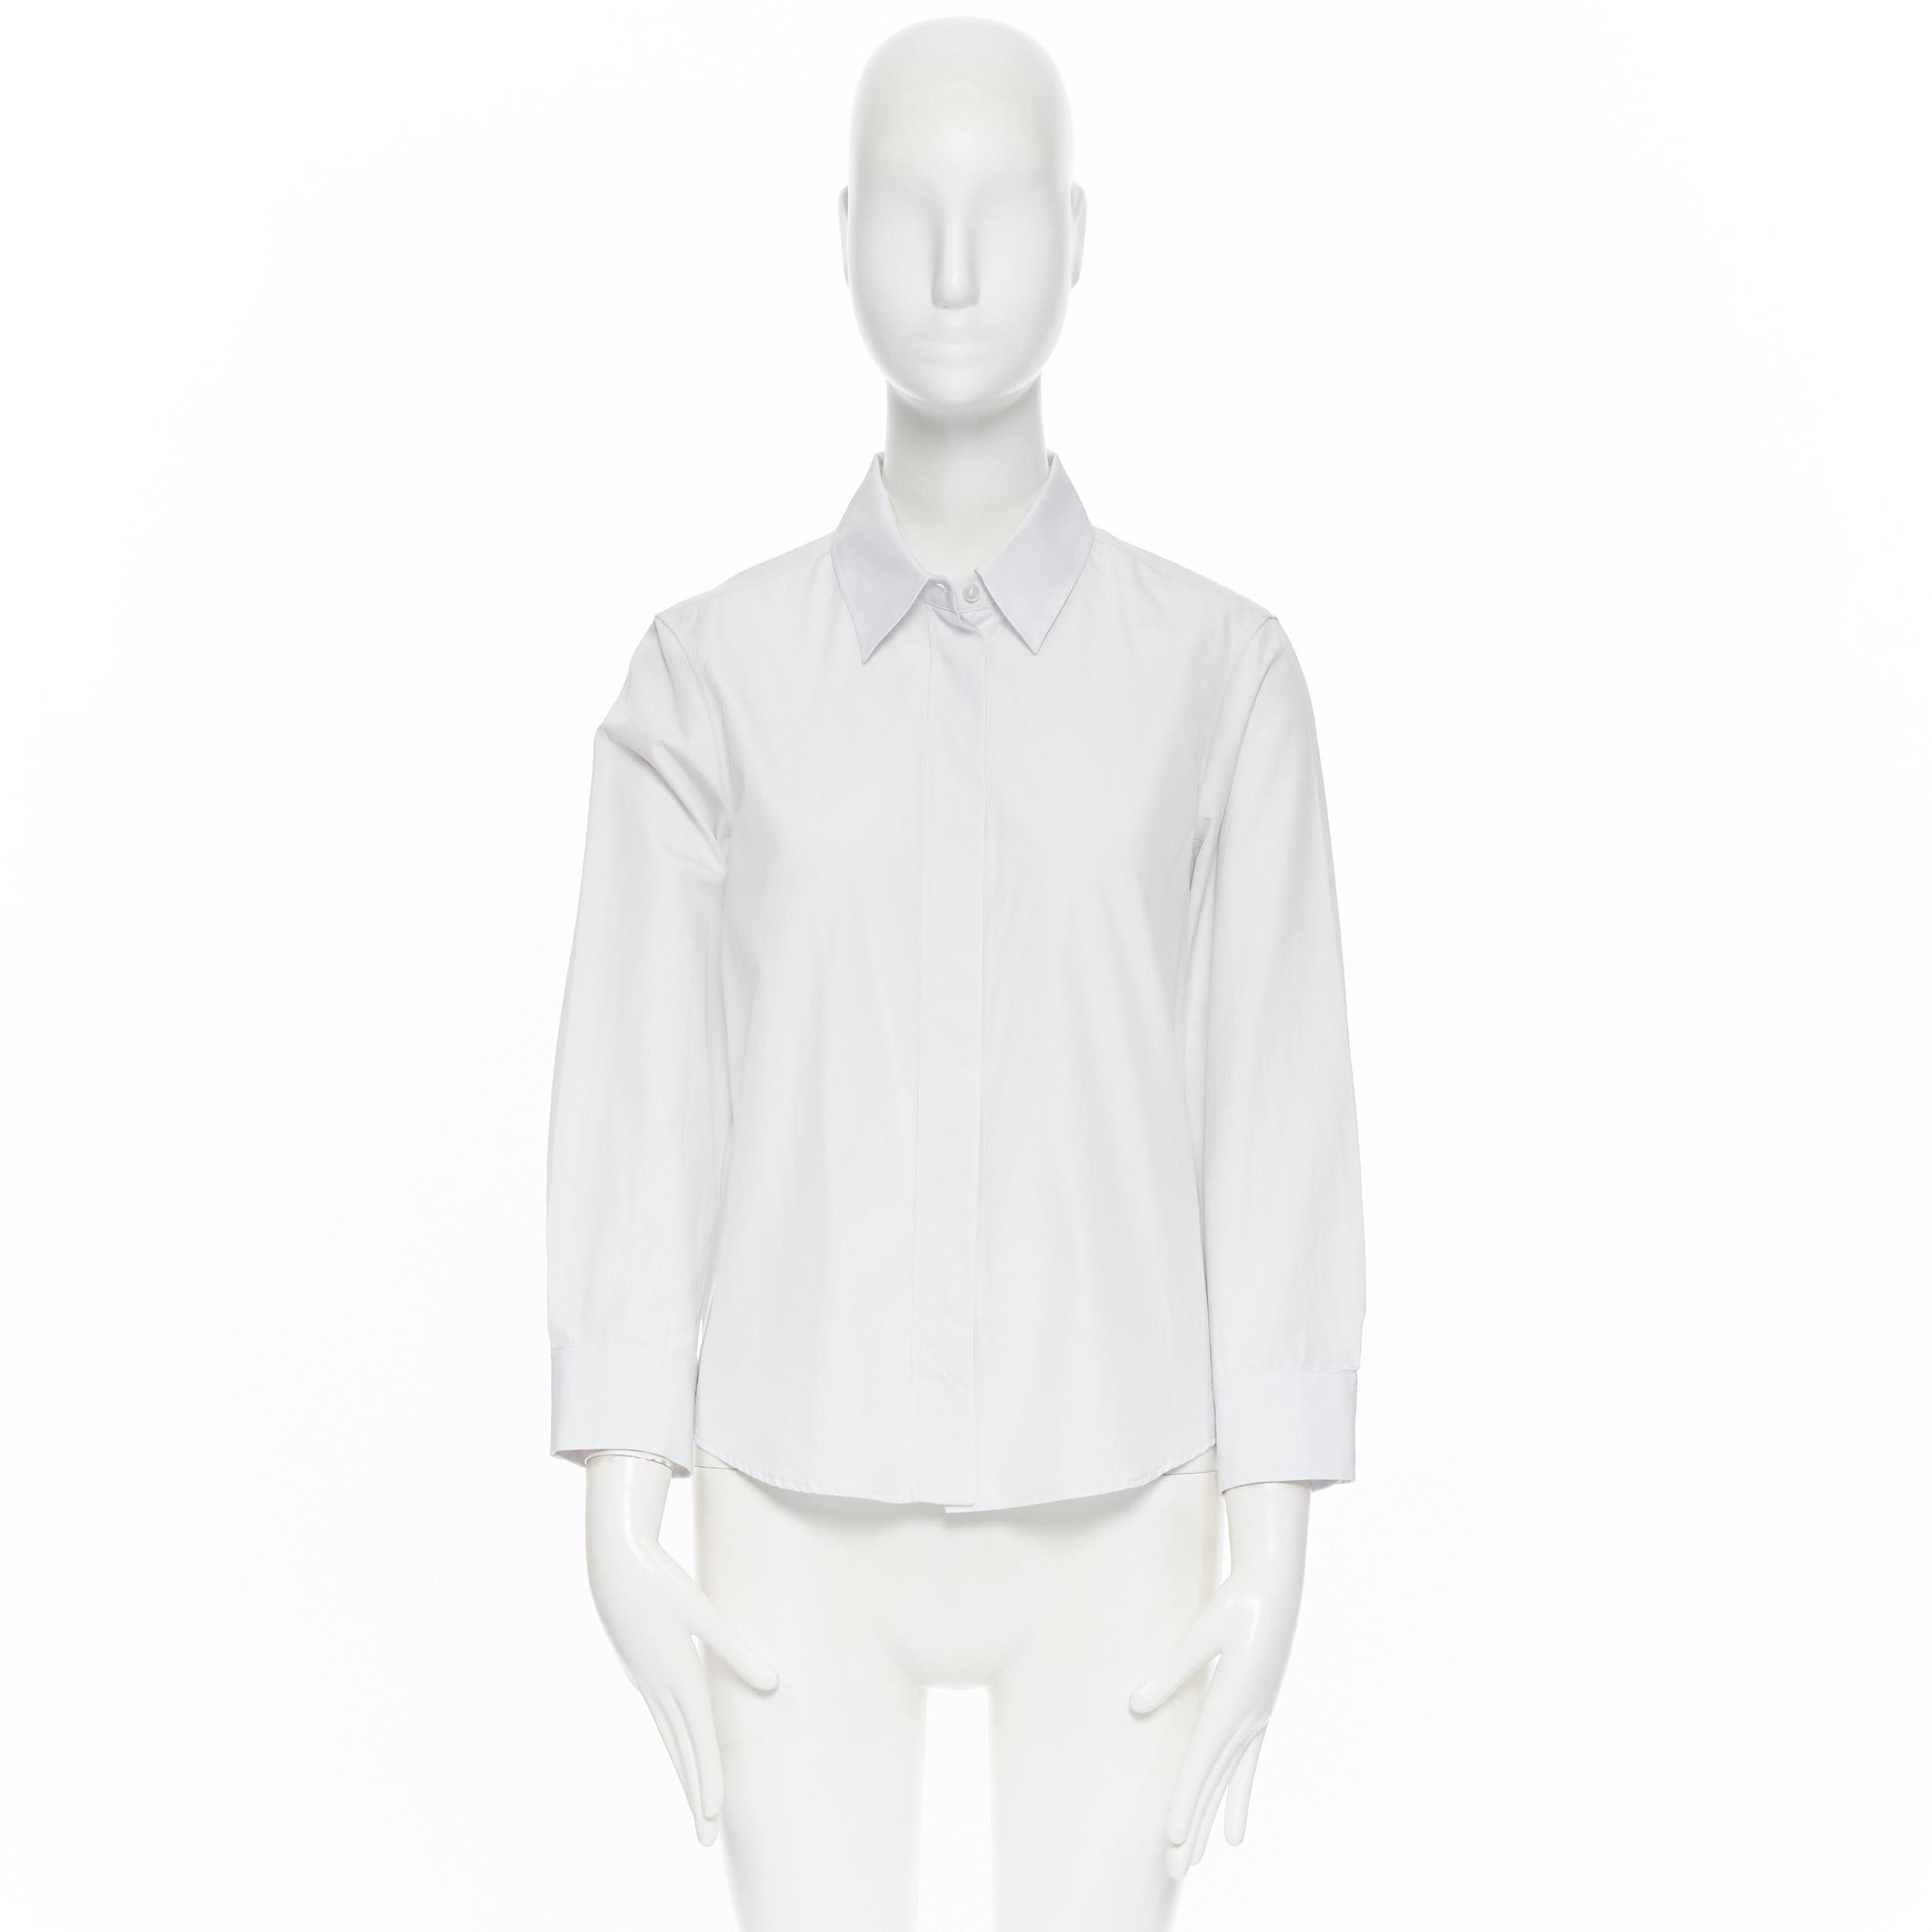 Gray JIL SANDER 100% cotton spead collar 3/4 sleeves curved hem shirt FR34 XS